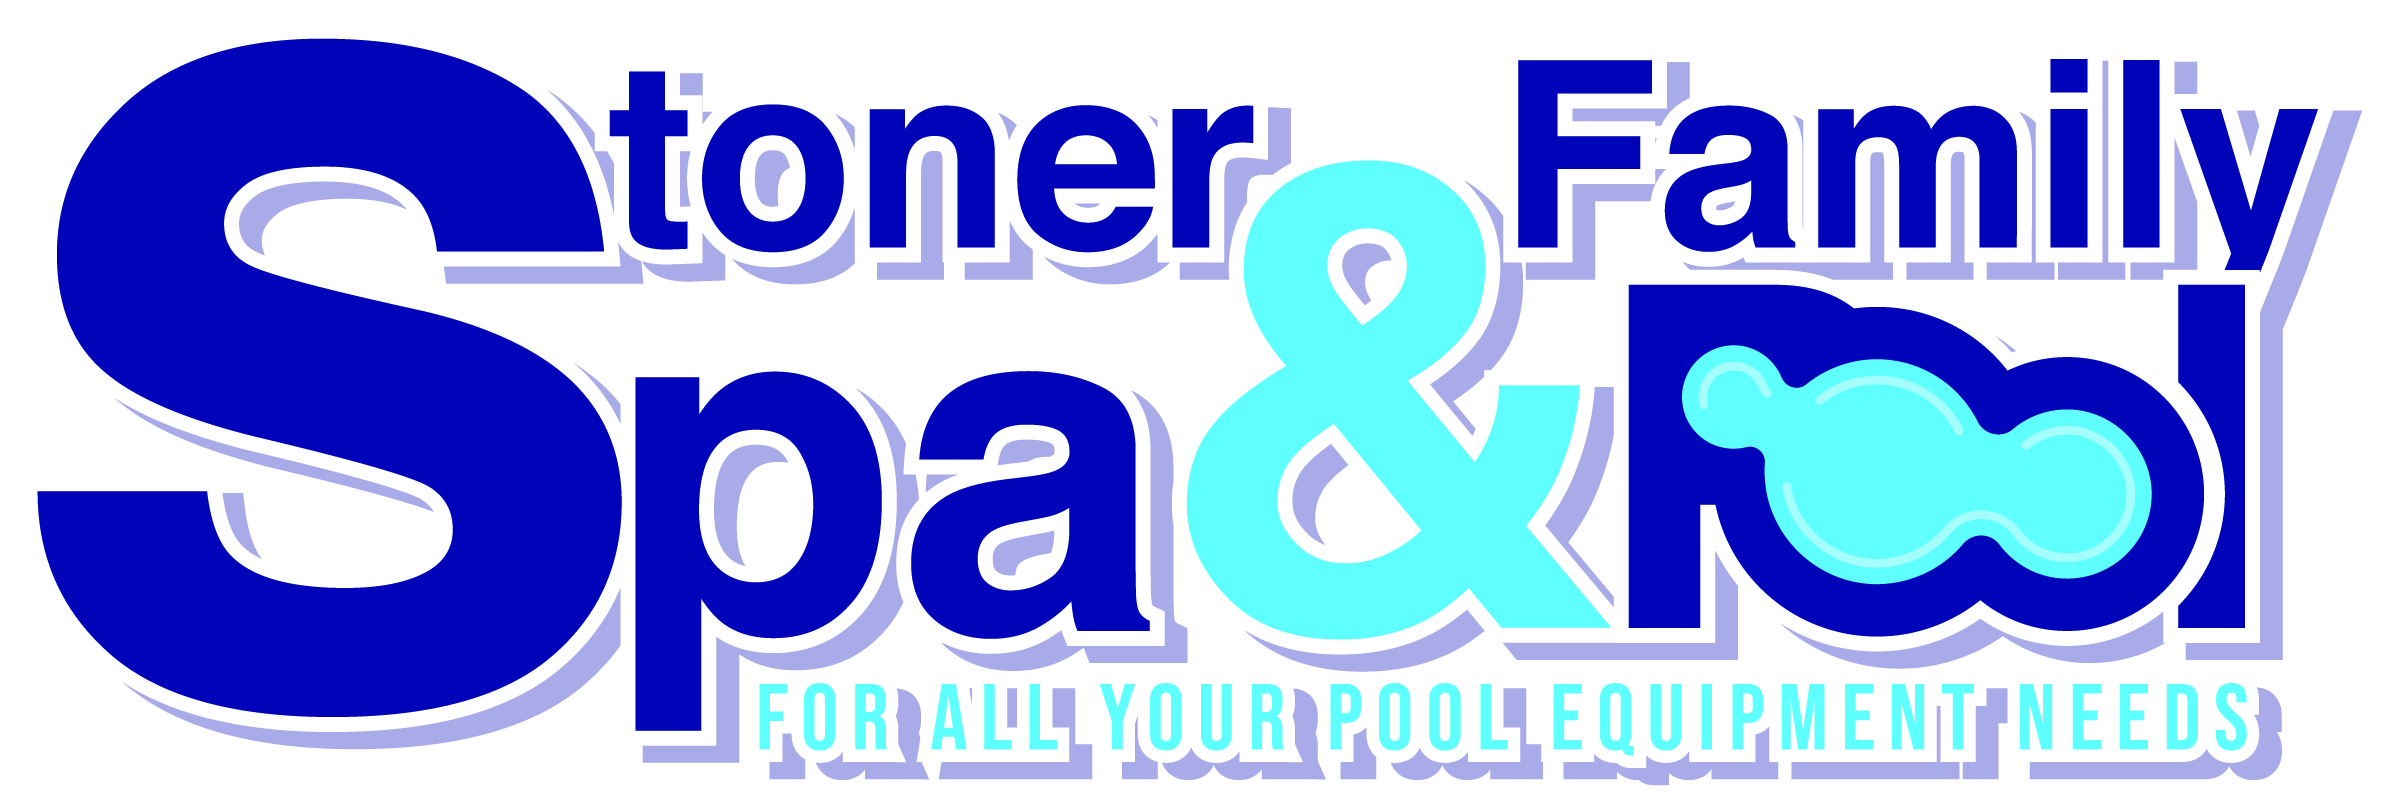 Stoner Family Spa and Pool LLC Logo